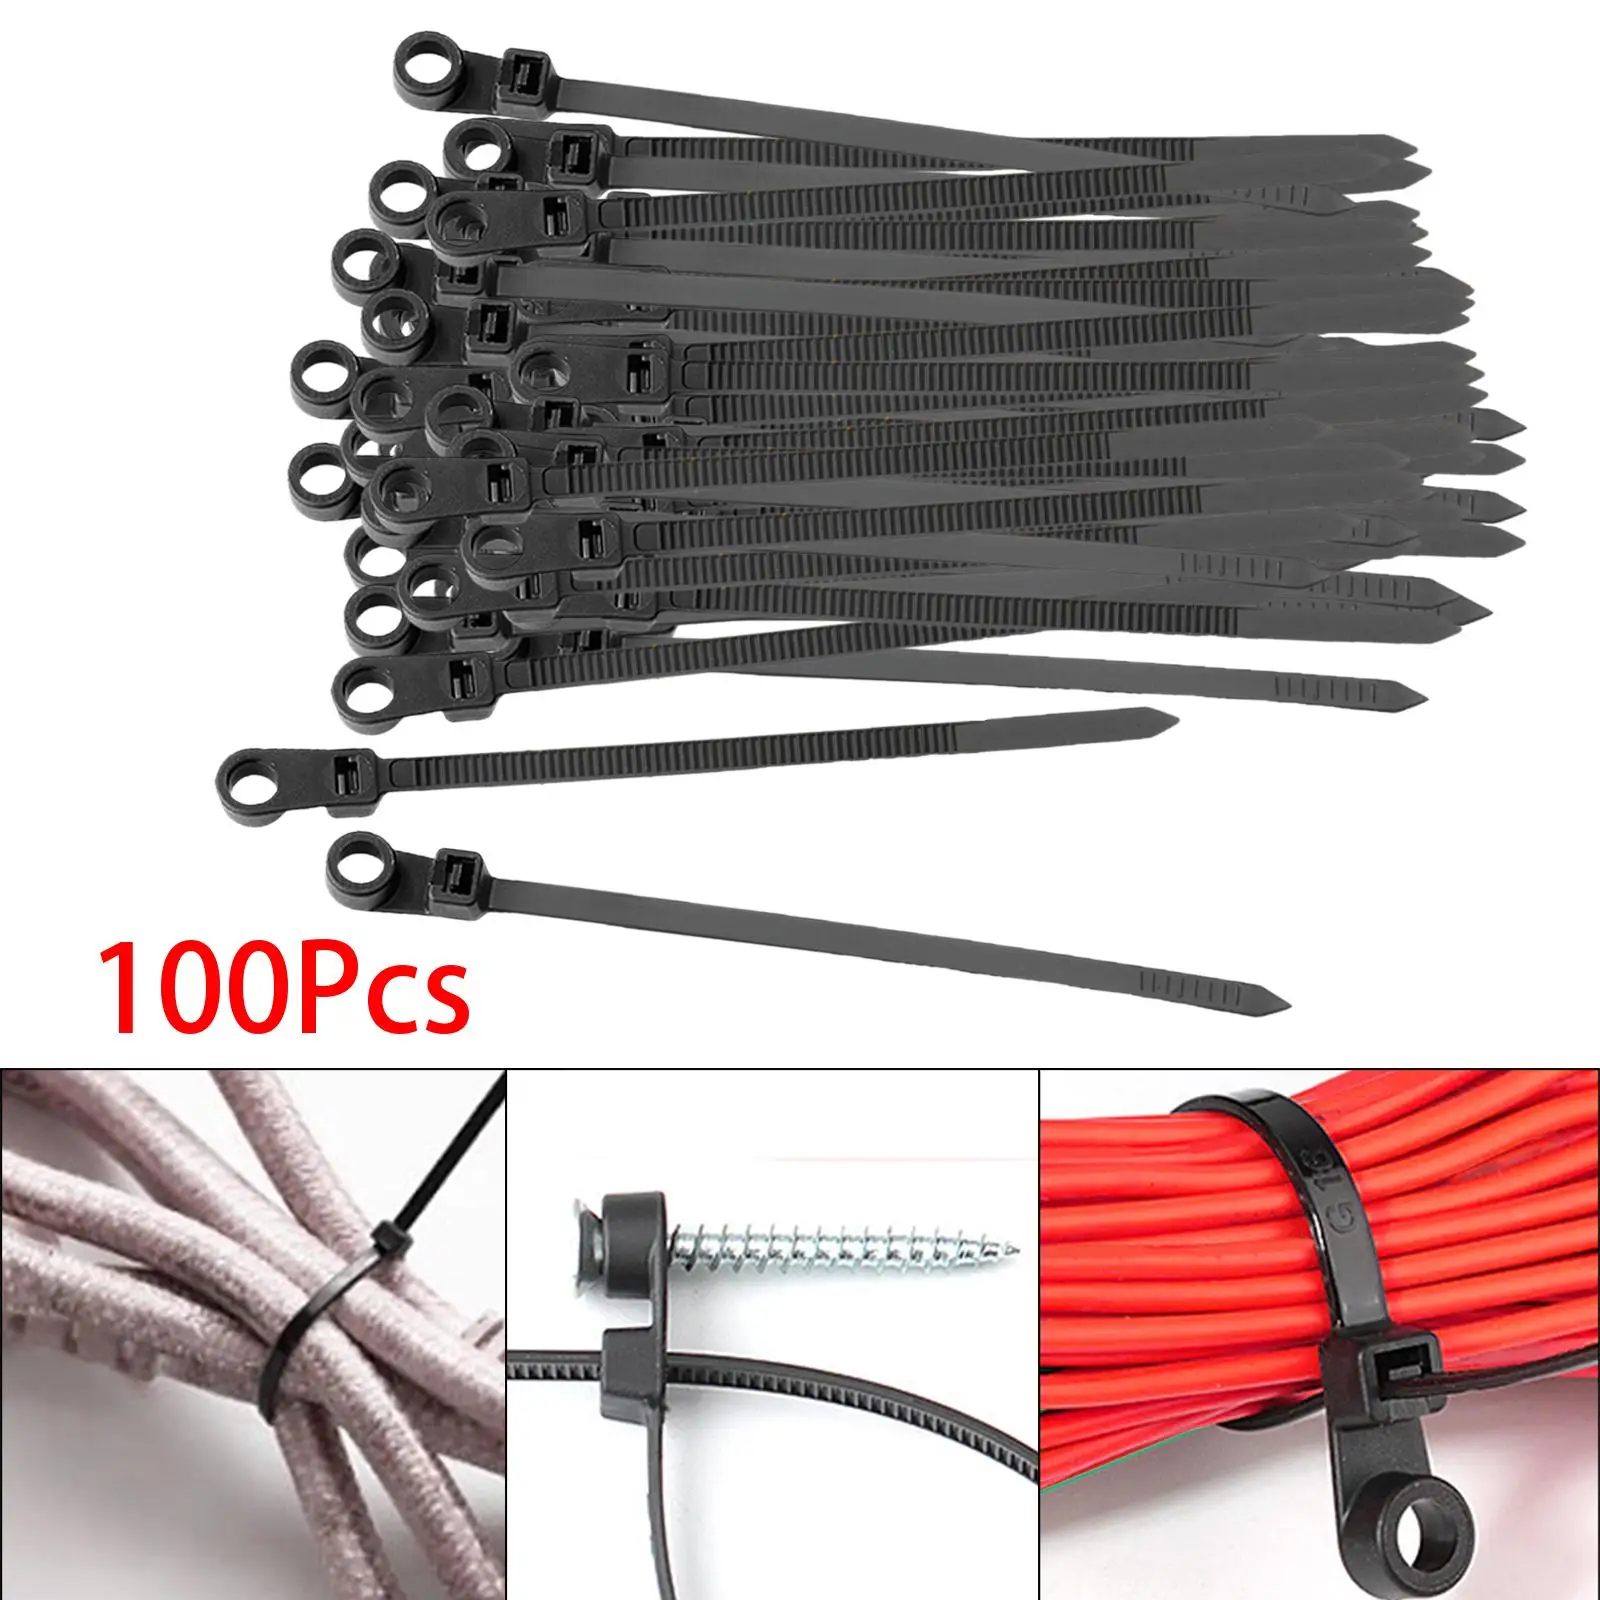 100 Pieces Nylon Cable Wire Zip Ties Mounting Hole Heavy Duty Zip Wire Ties for Workshop Garden Home Office Indoor Outdoor